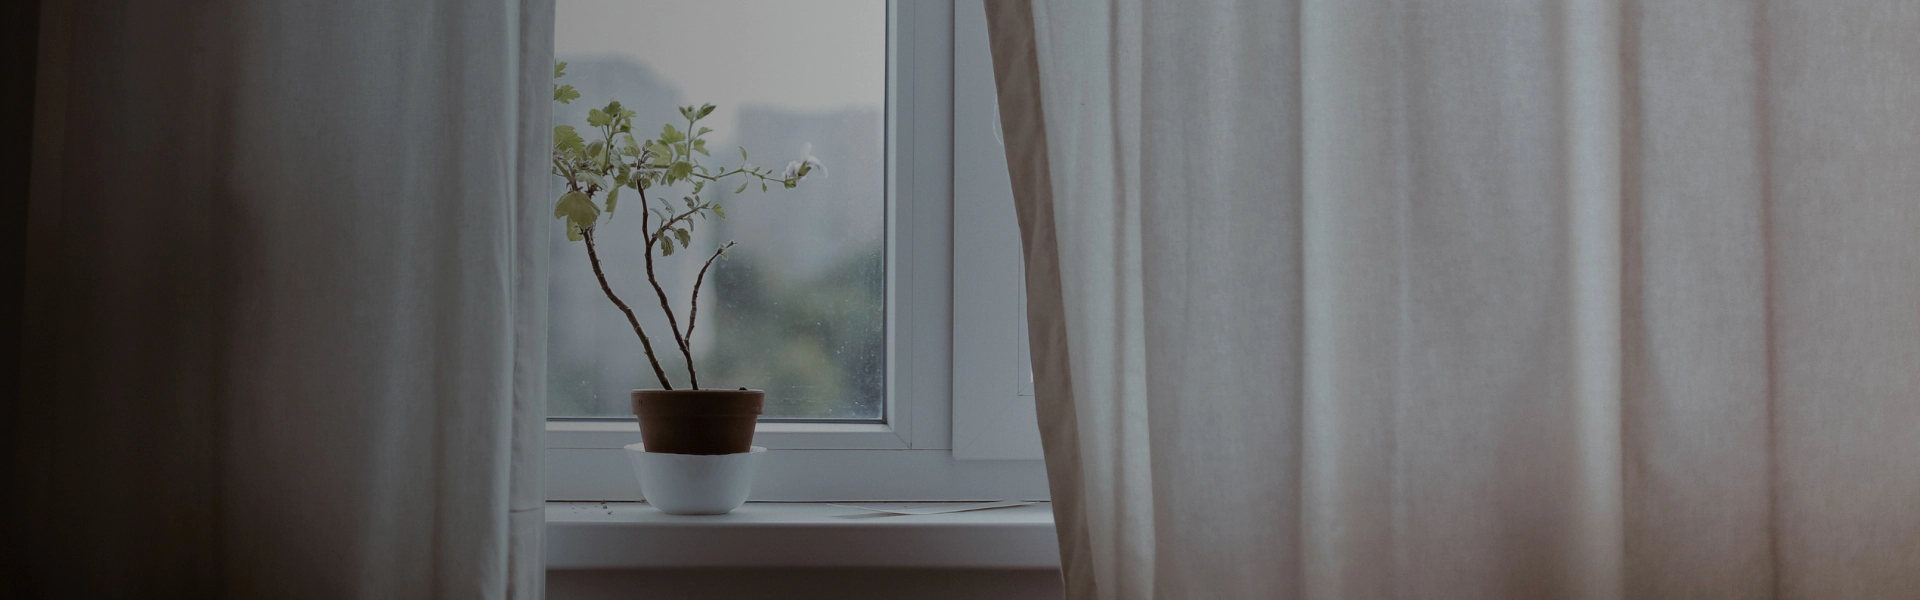 small plant on top of window shelf